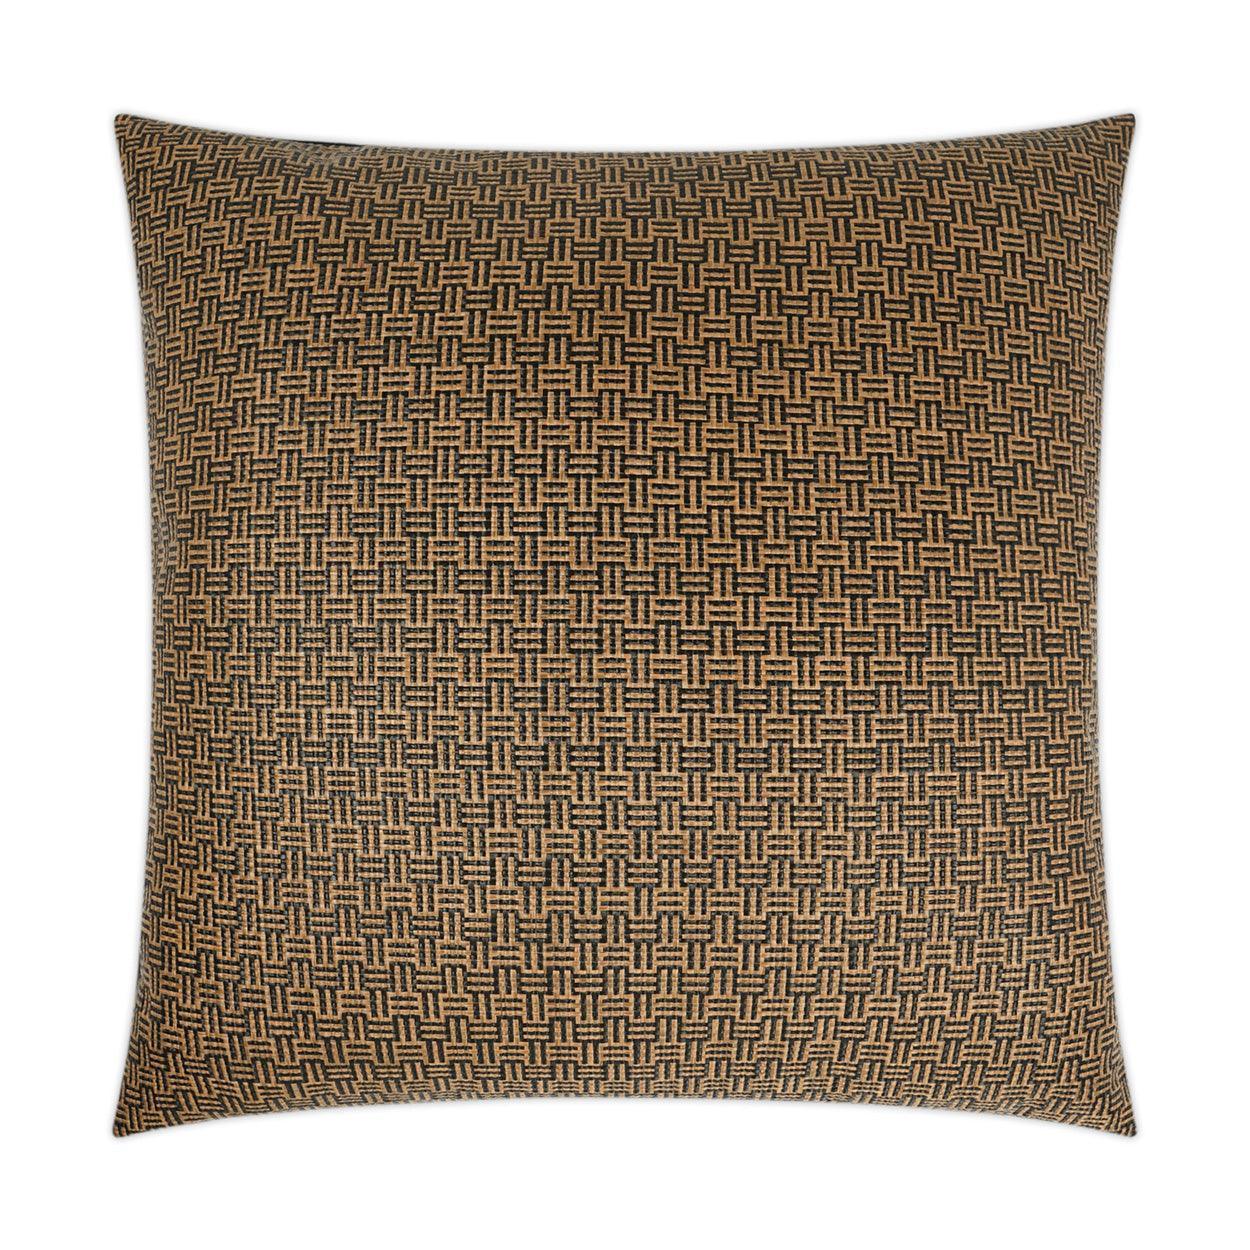 Thatchwork Safari Geometric Brown Large Throw Pillow With Insert - Uptown Sebastian